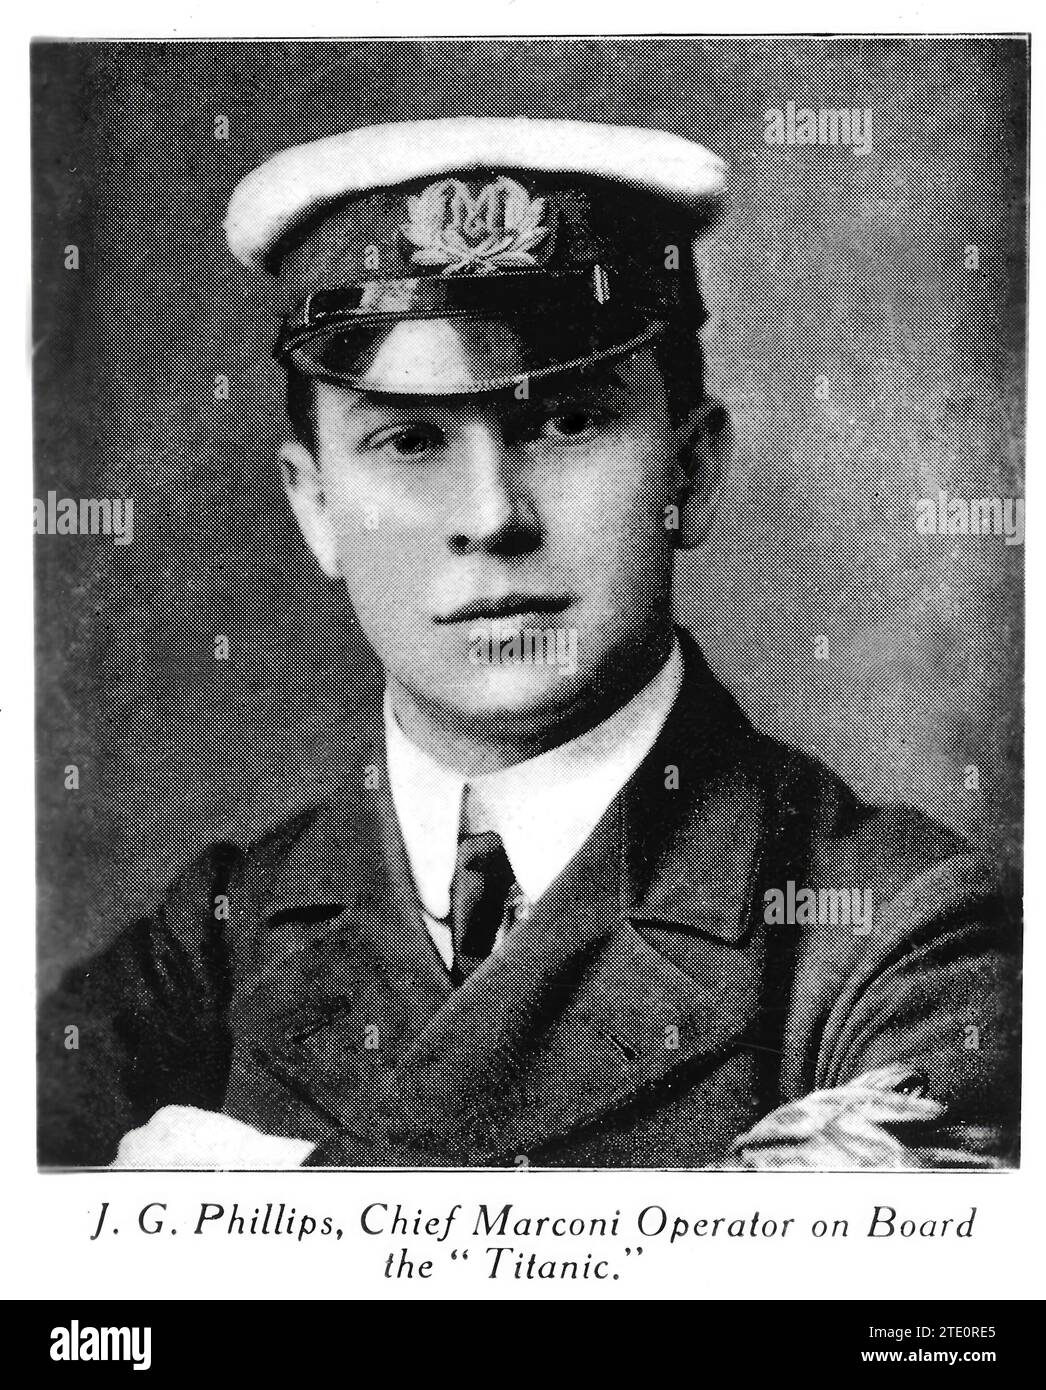 01/01/1912. Head of the Titanic radiotelegraph service - Approximate date. Credit: Album / Archivo ABC Stock Photo